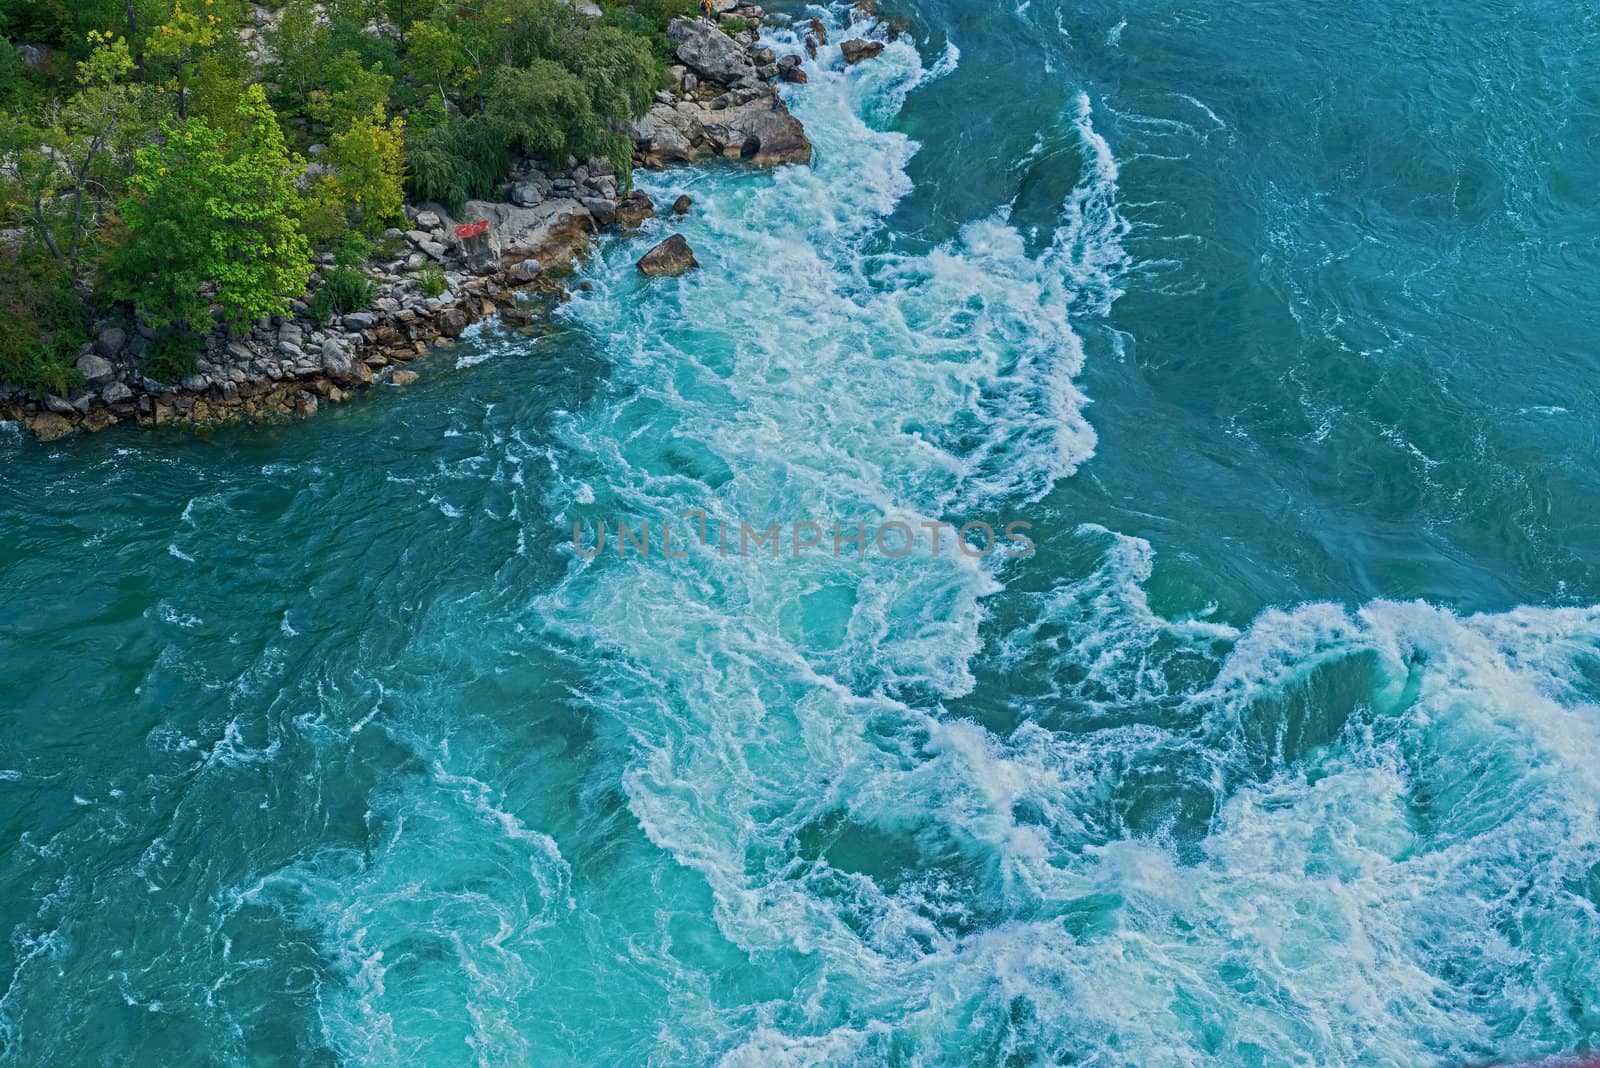 Lower Niagara river, Ontario Canada by Marcus